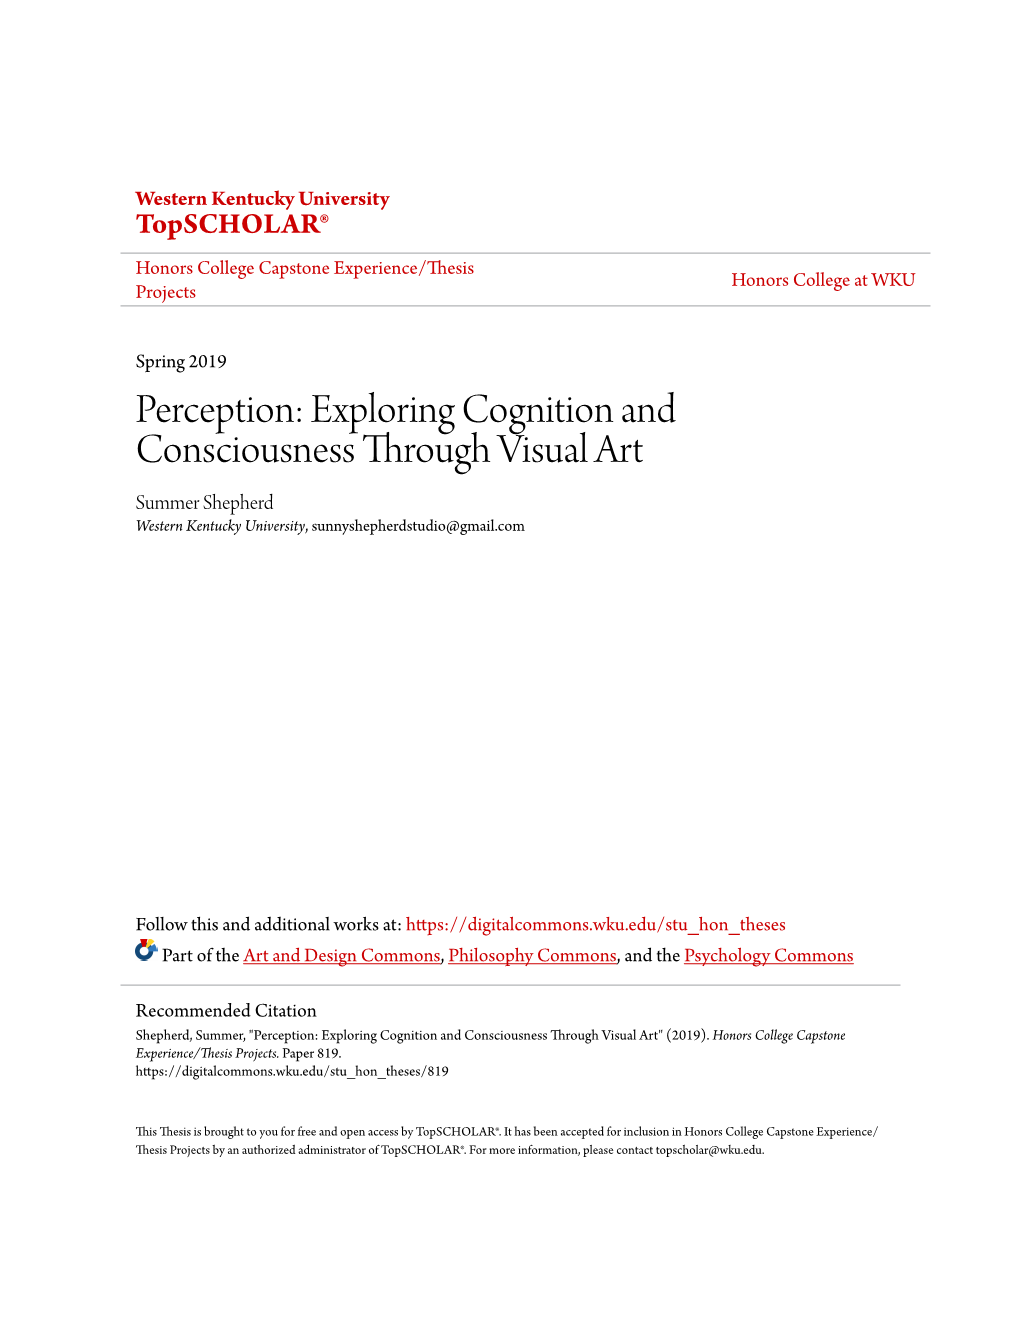 Perception: Exploring Cognition and Consciousness Through Visual Art Summer Shepherd Western Kentucky University, Sunnyshepherdstudio@Gmail.Com